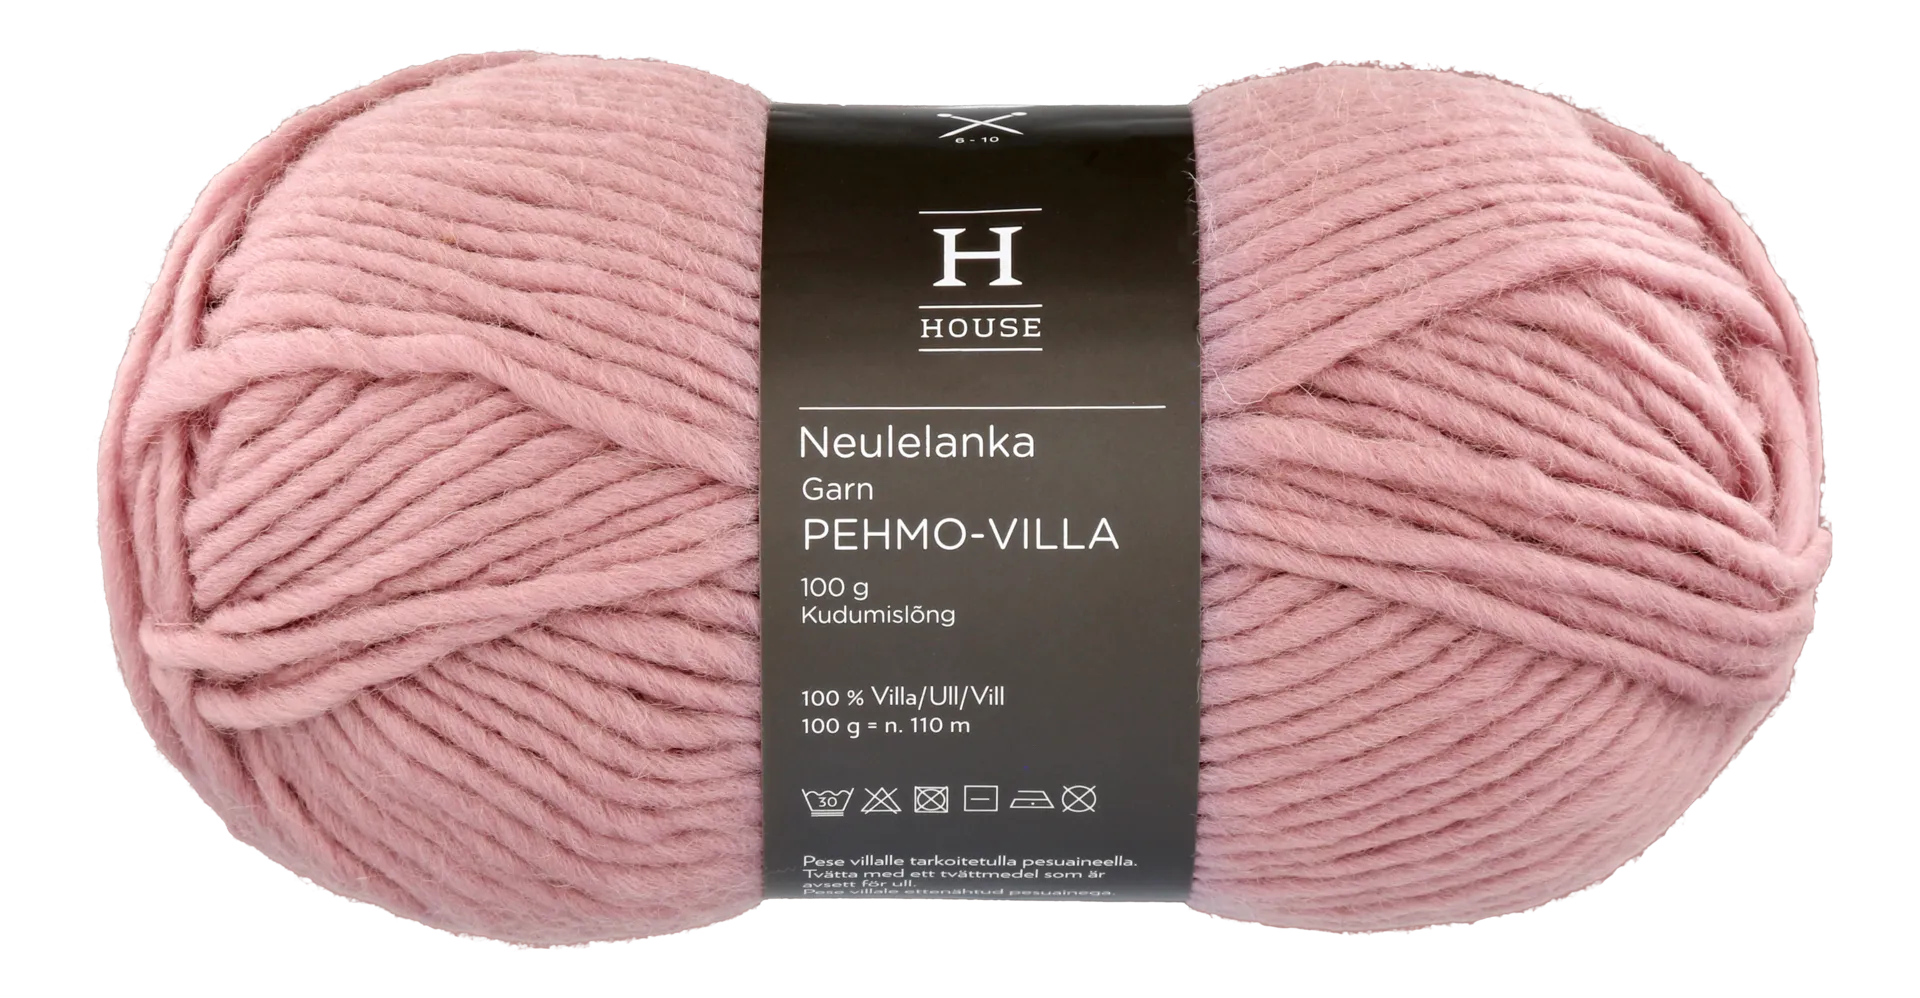 House neulelanka Pehmovilla 112706 100 g Light Pink 11479